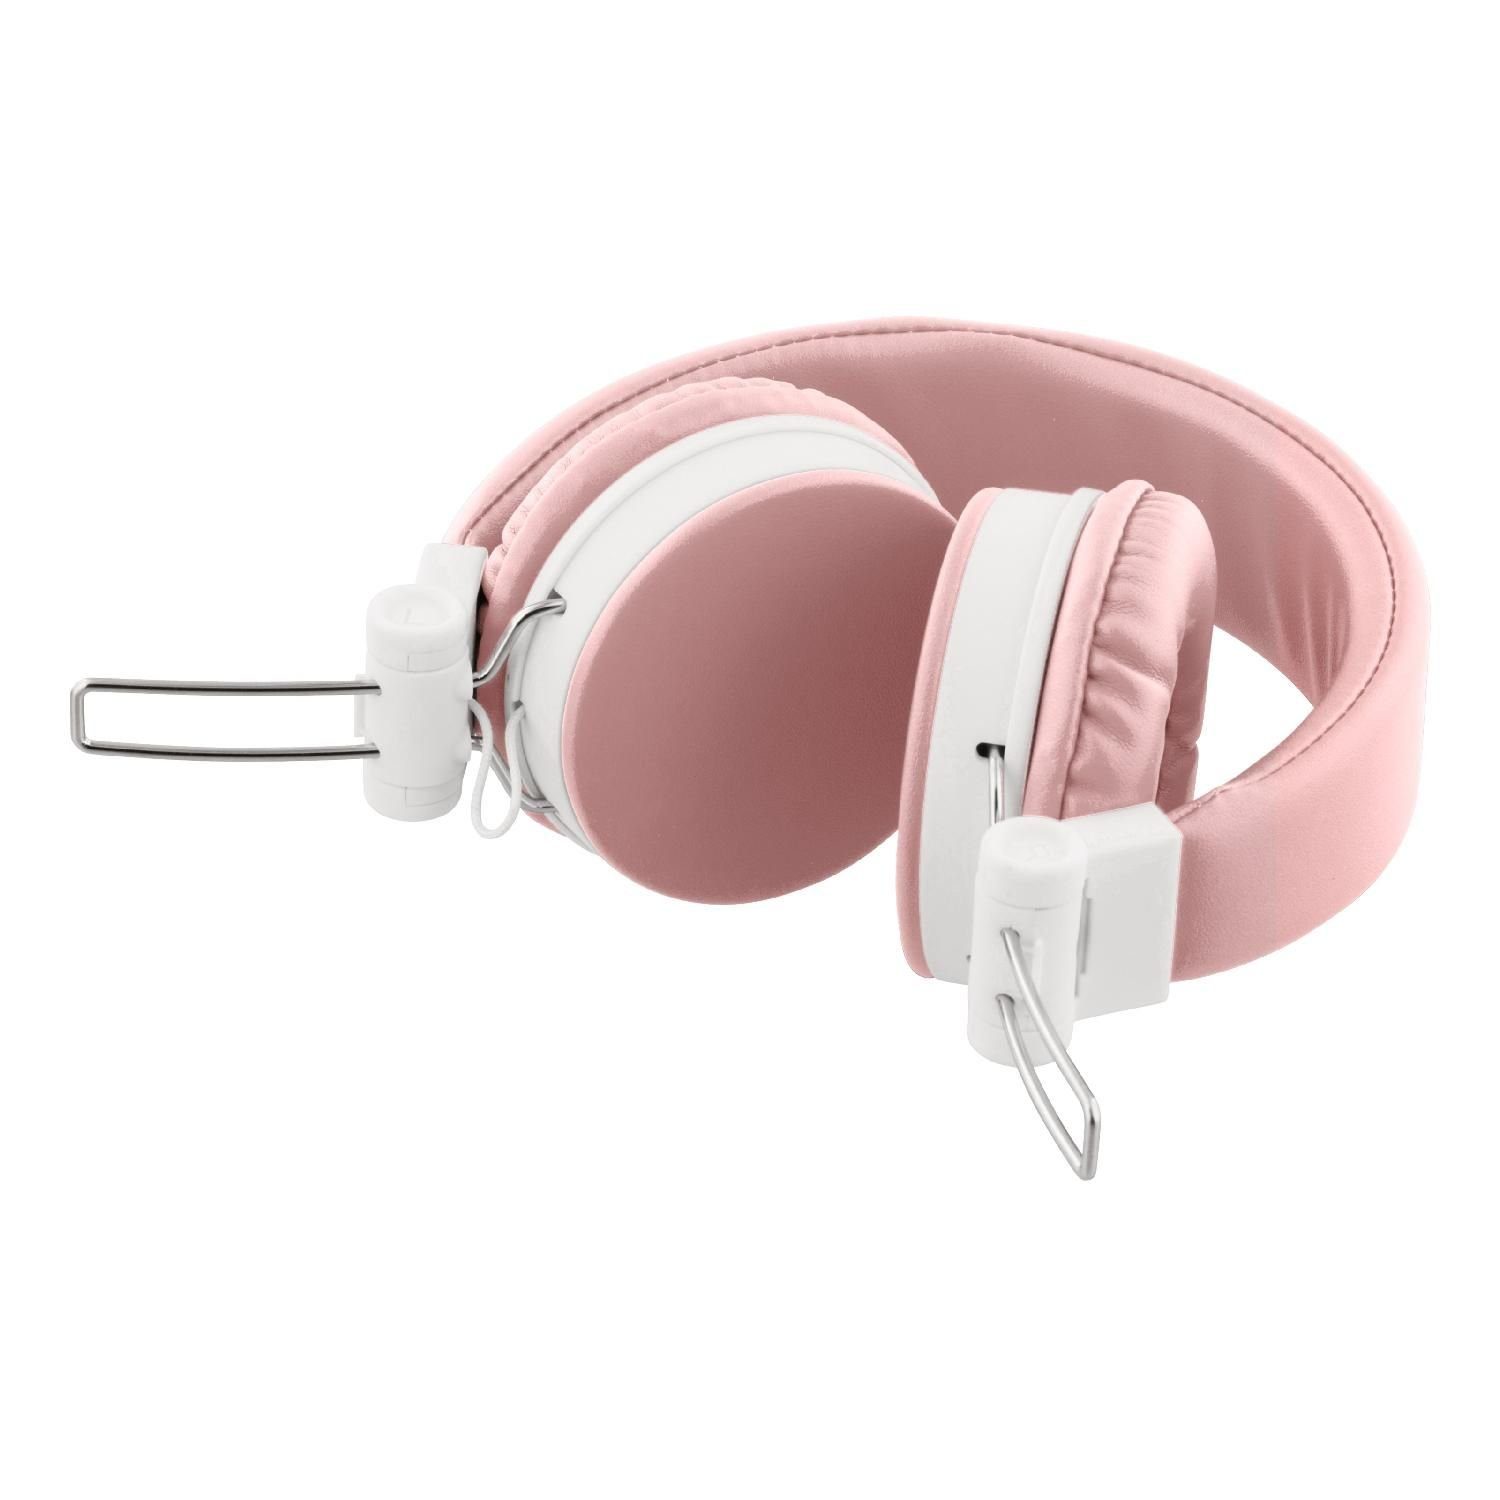 Kopfhörer (integriertes Mikrofon, faltbares 1,2m 3.5mm inkl. Herstellergarantie) / Headset, 5 On-Ear-Kopfhörer Ohrpolster rosa, Kabel pink Klinkenanschluss STREETZ Jahre